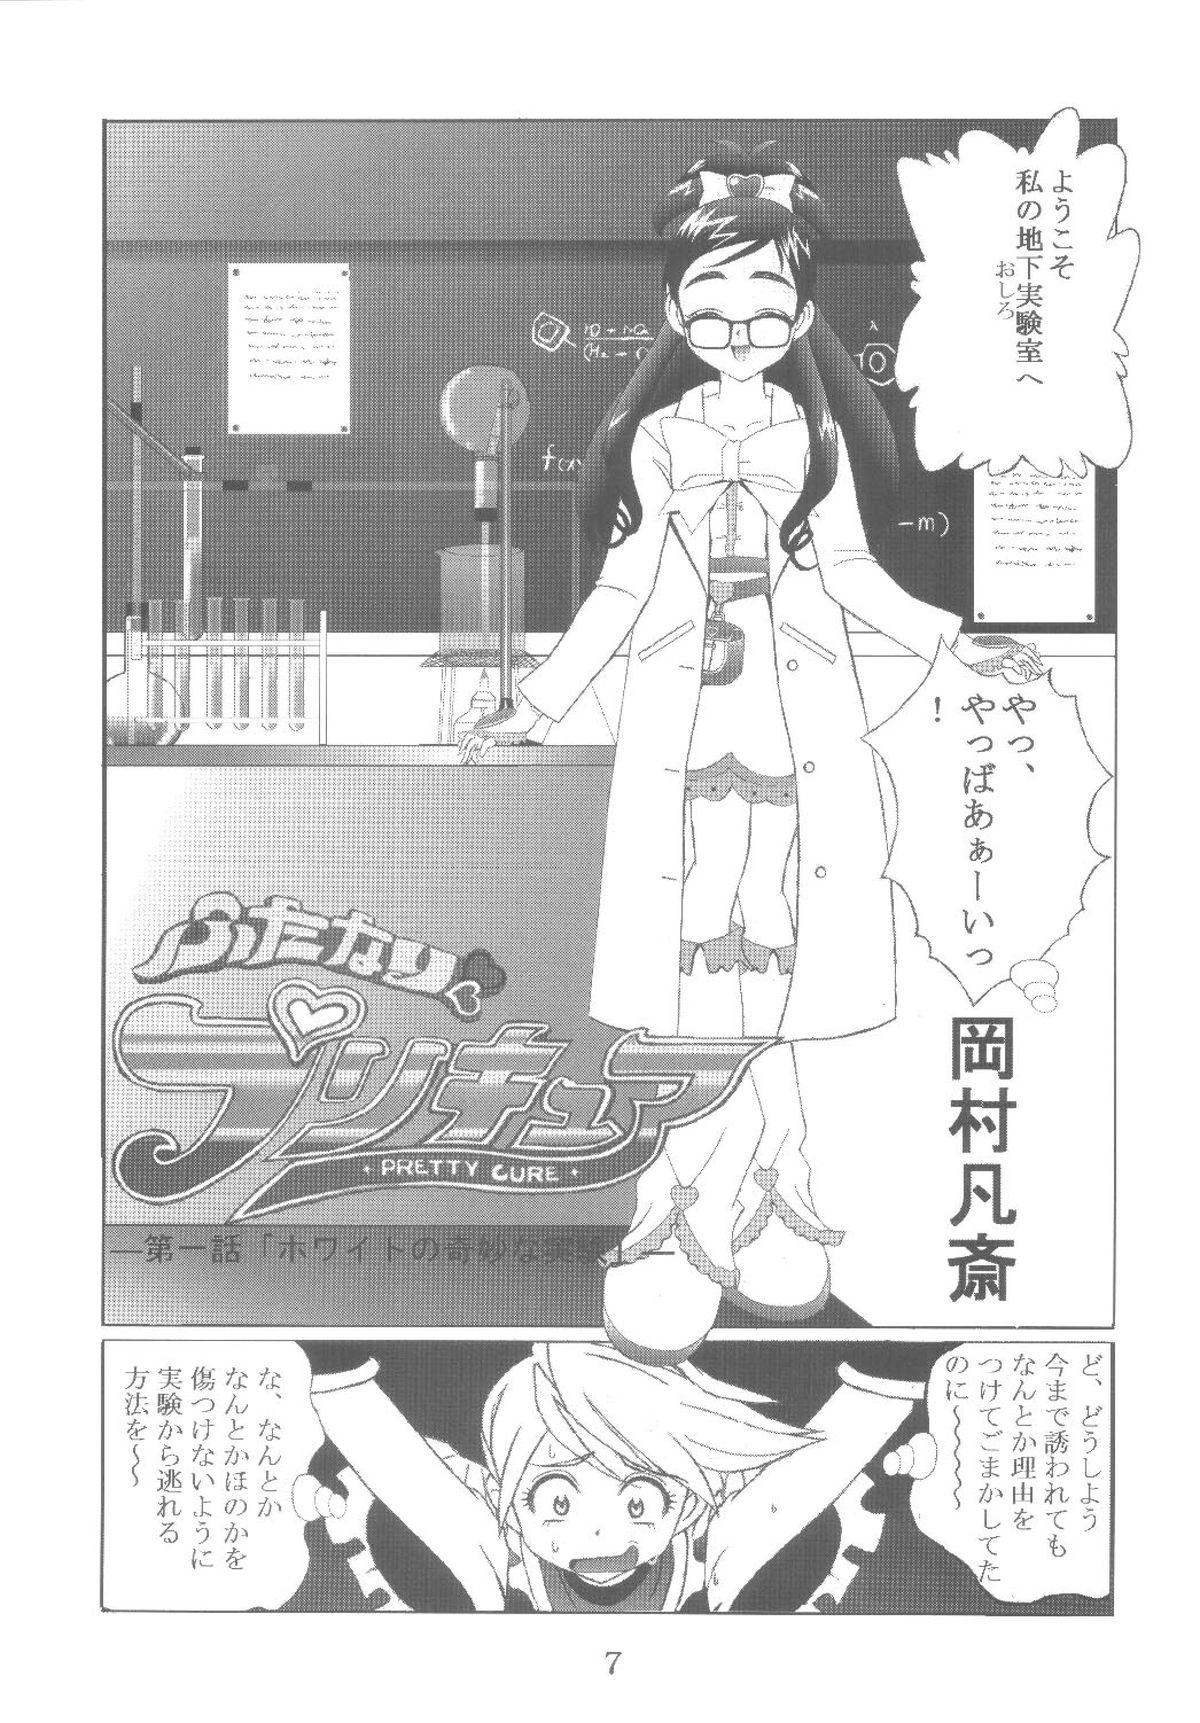 Indo Kuuronziyou 12 Futanari Precure - Pretty cure Cartoon - Page 7